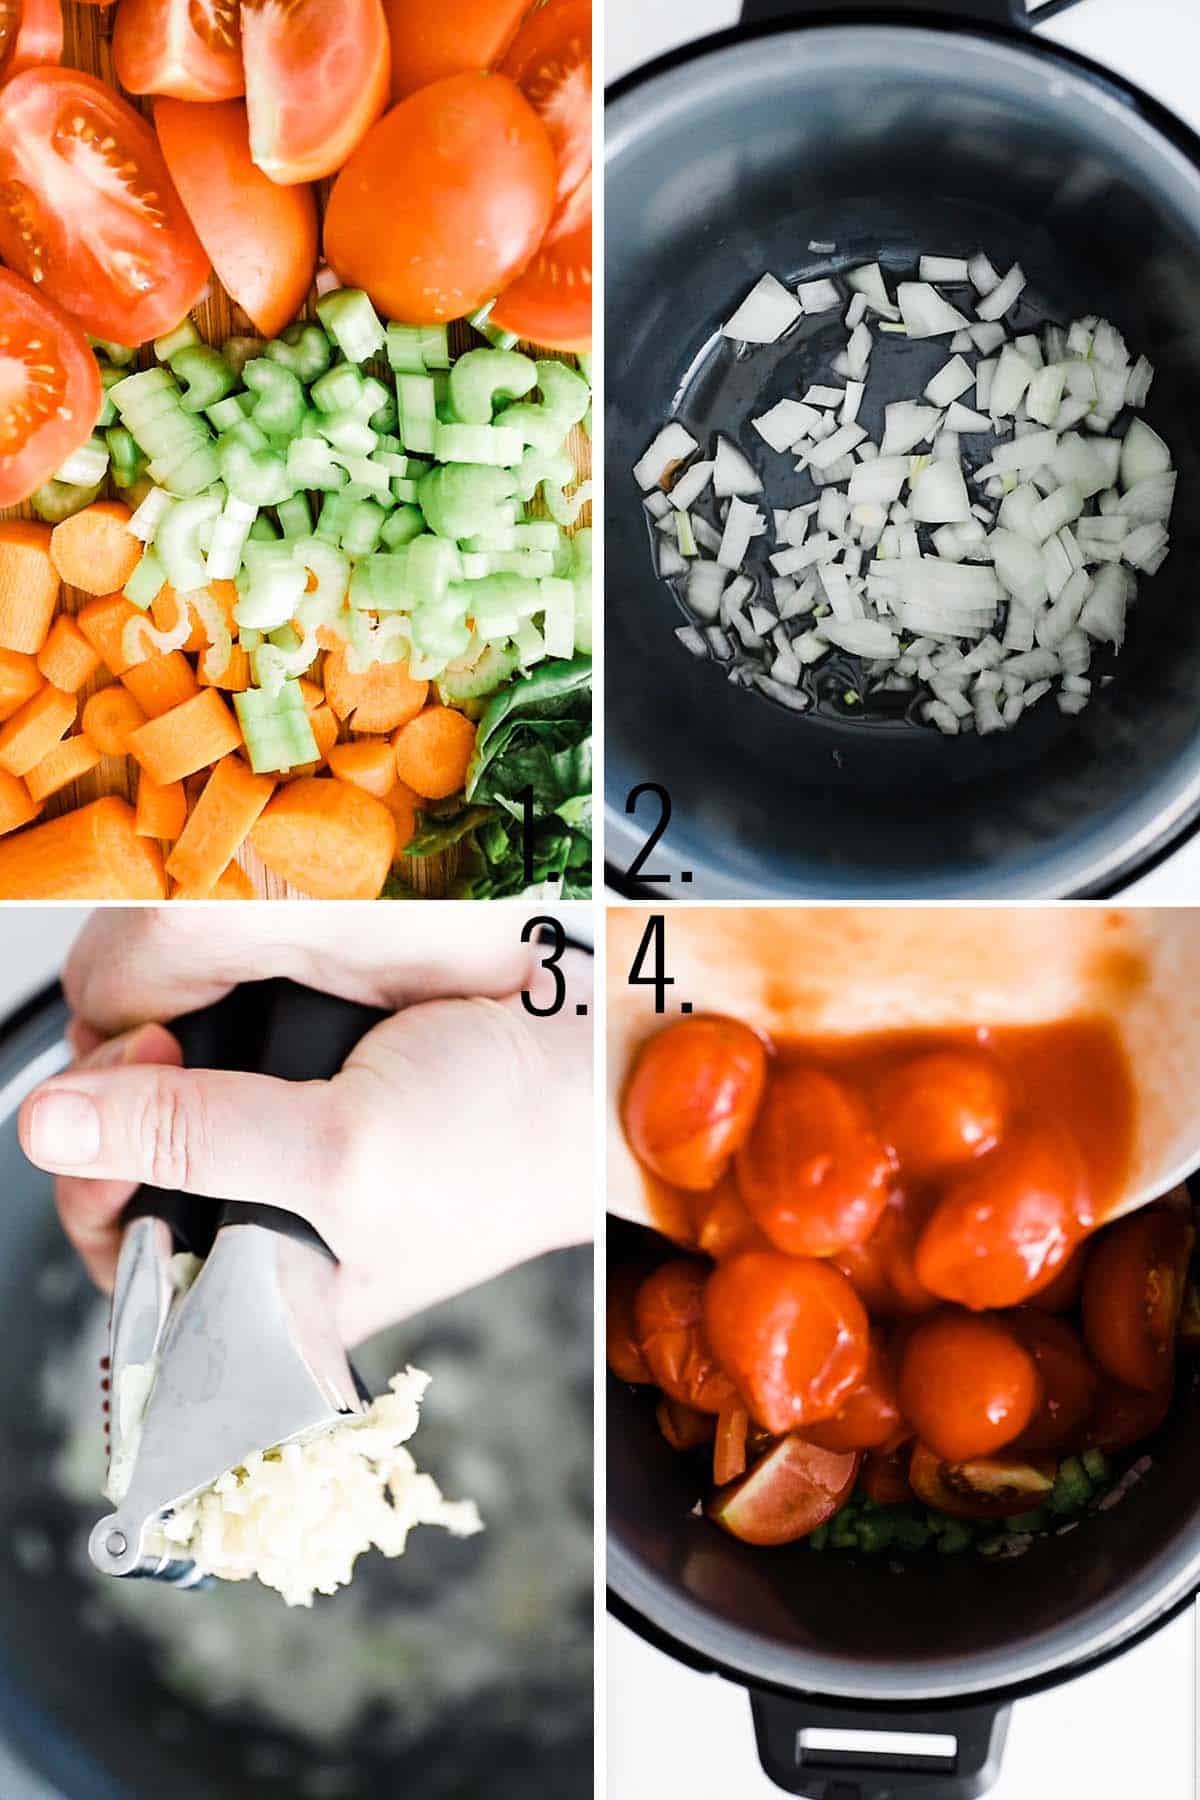 How to make tomato soup.